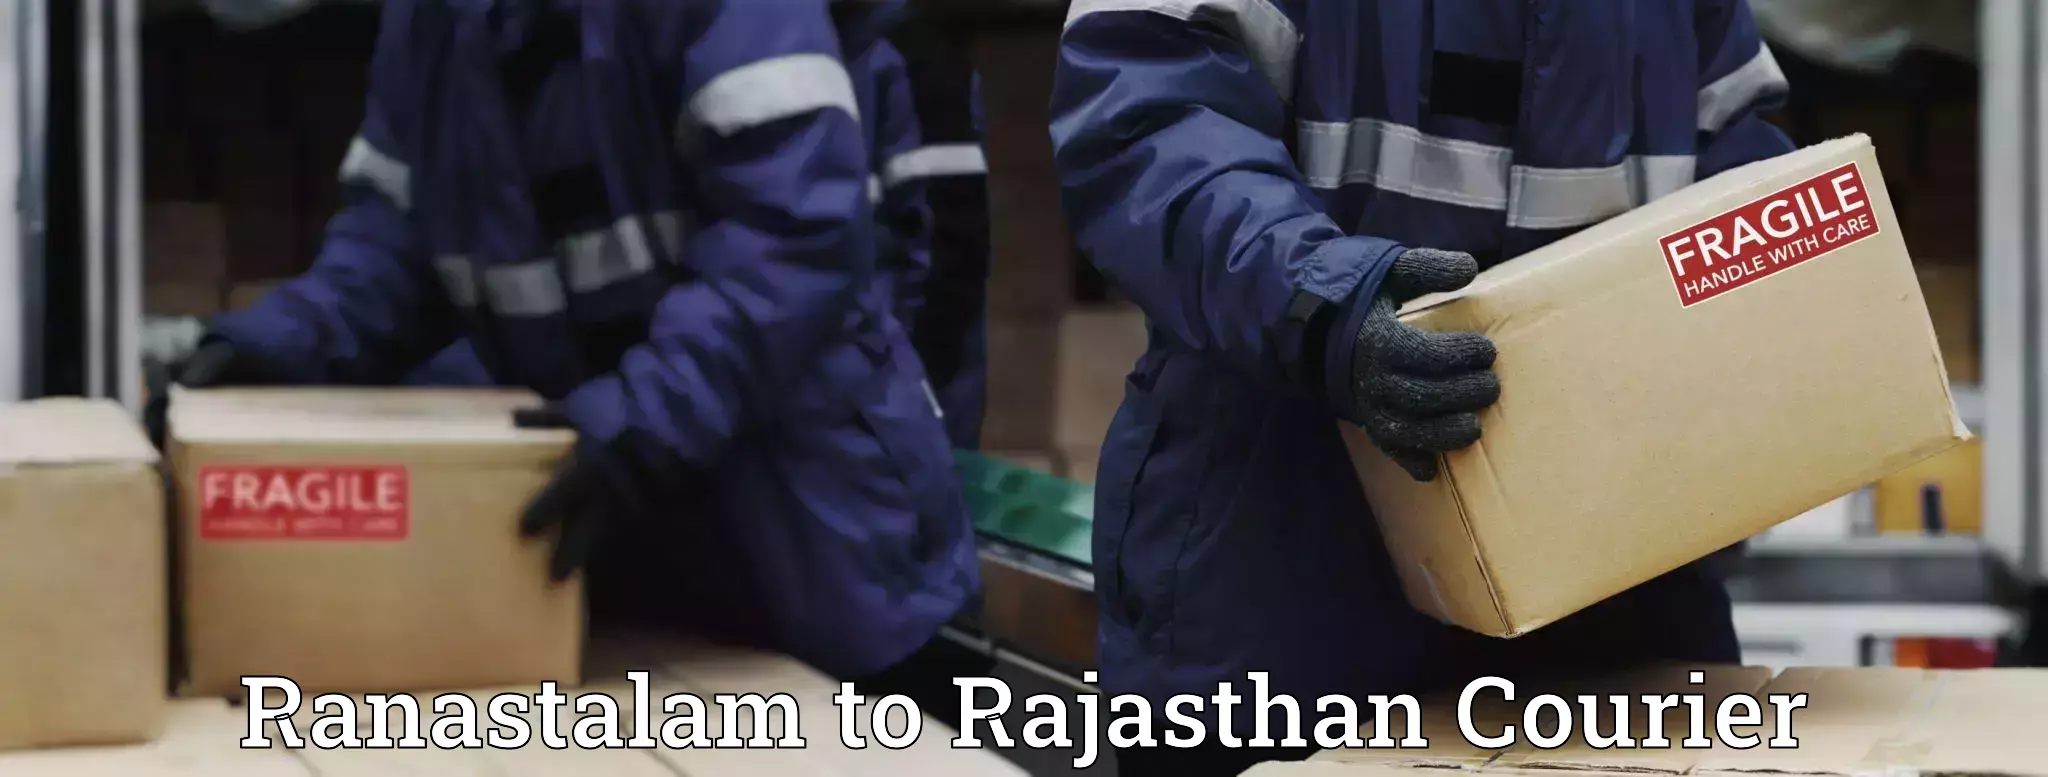 Versatile courier offerings Ranastalam to Rajasthan